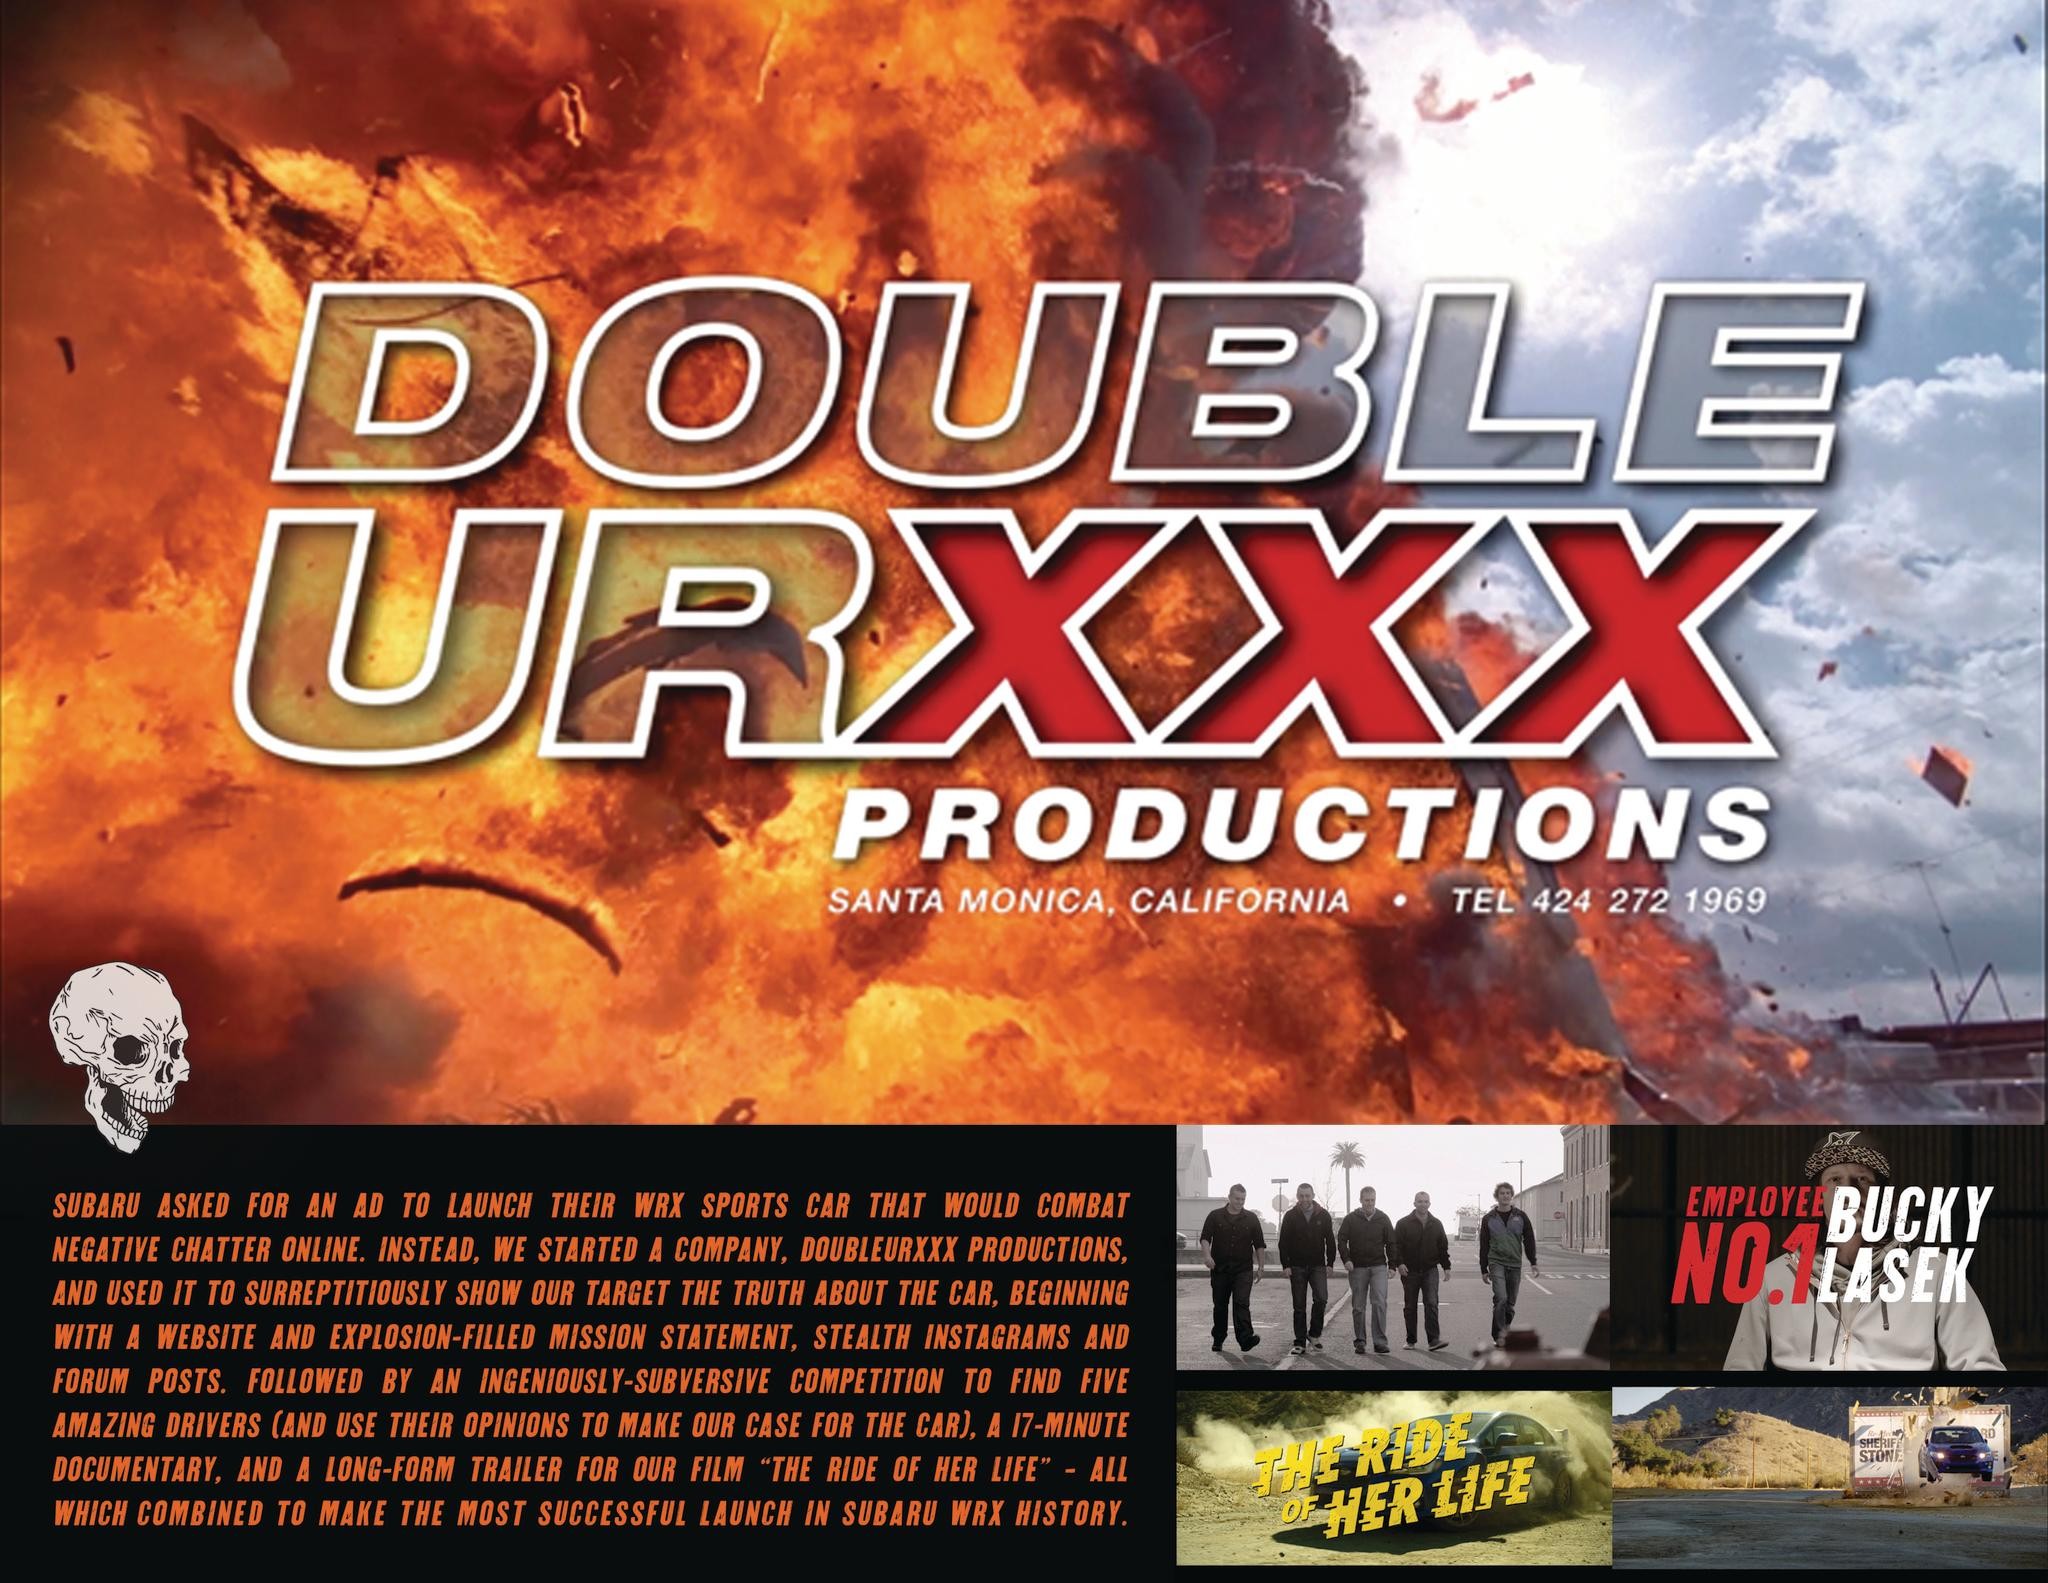 DOUBLEURXXX PRODUCTIONS